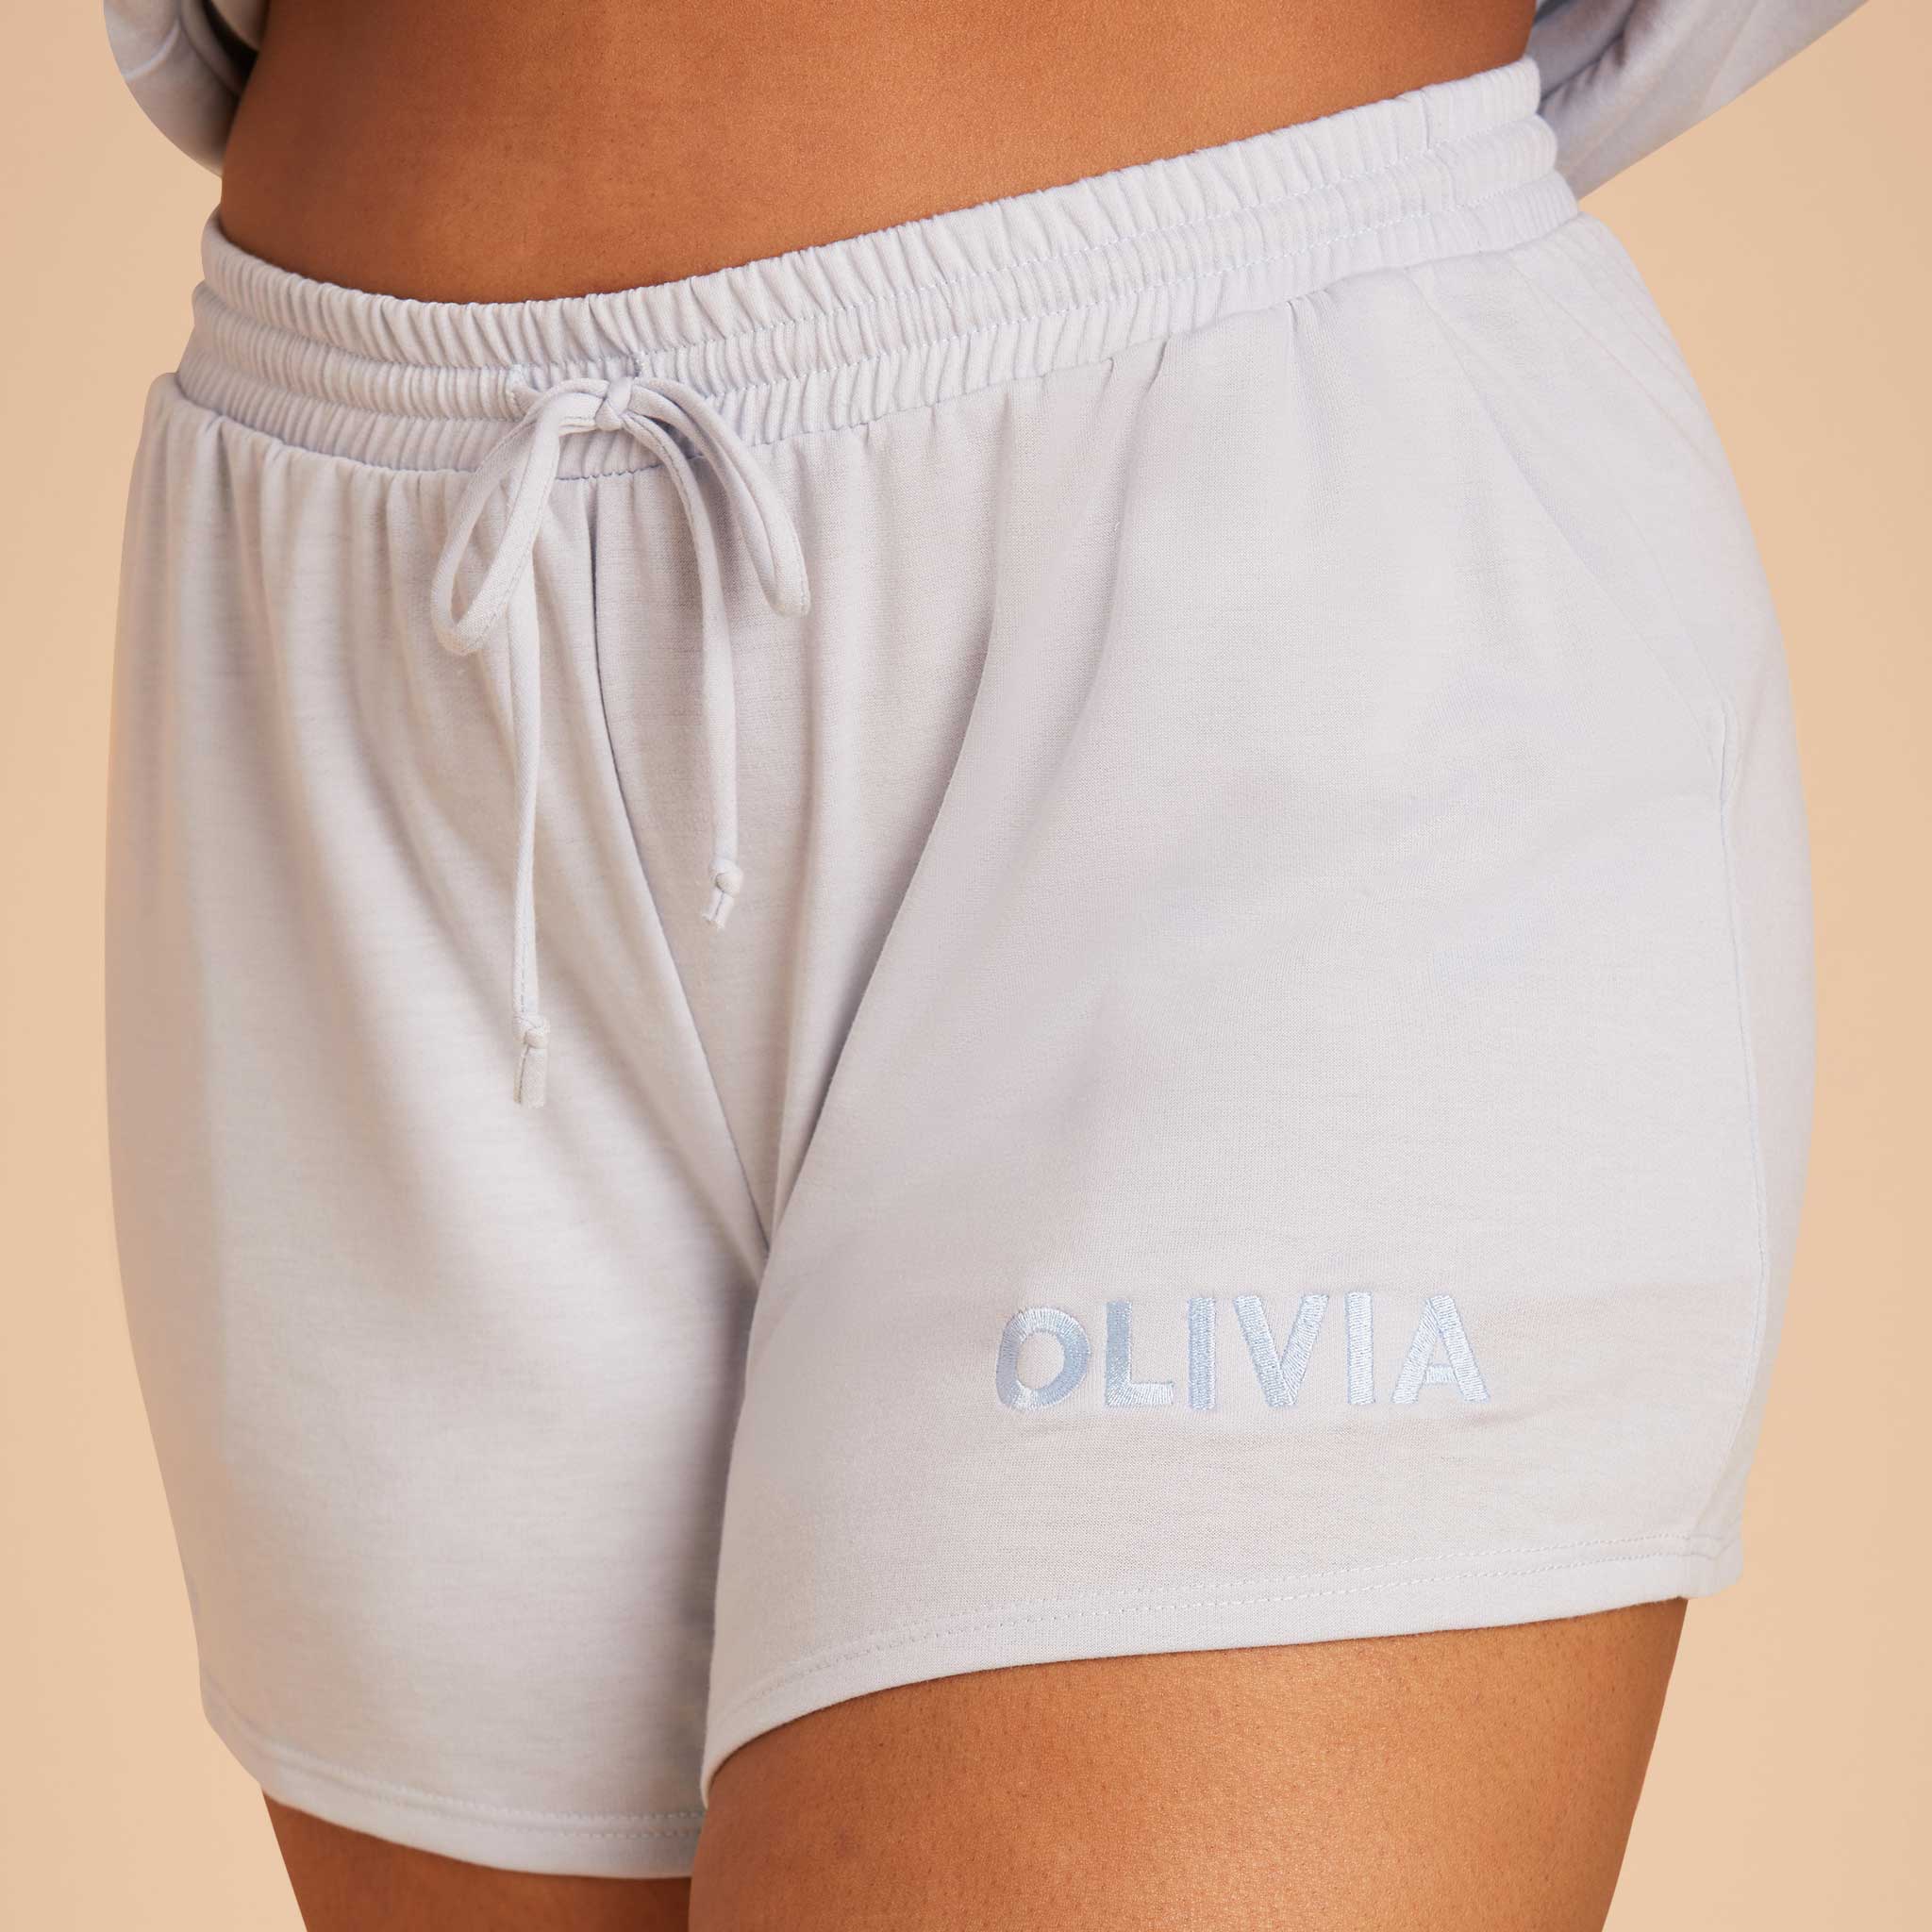 Plus Size Light Blue sweat shorts with personalization